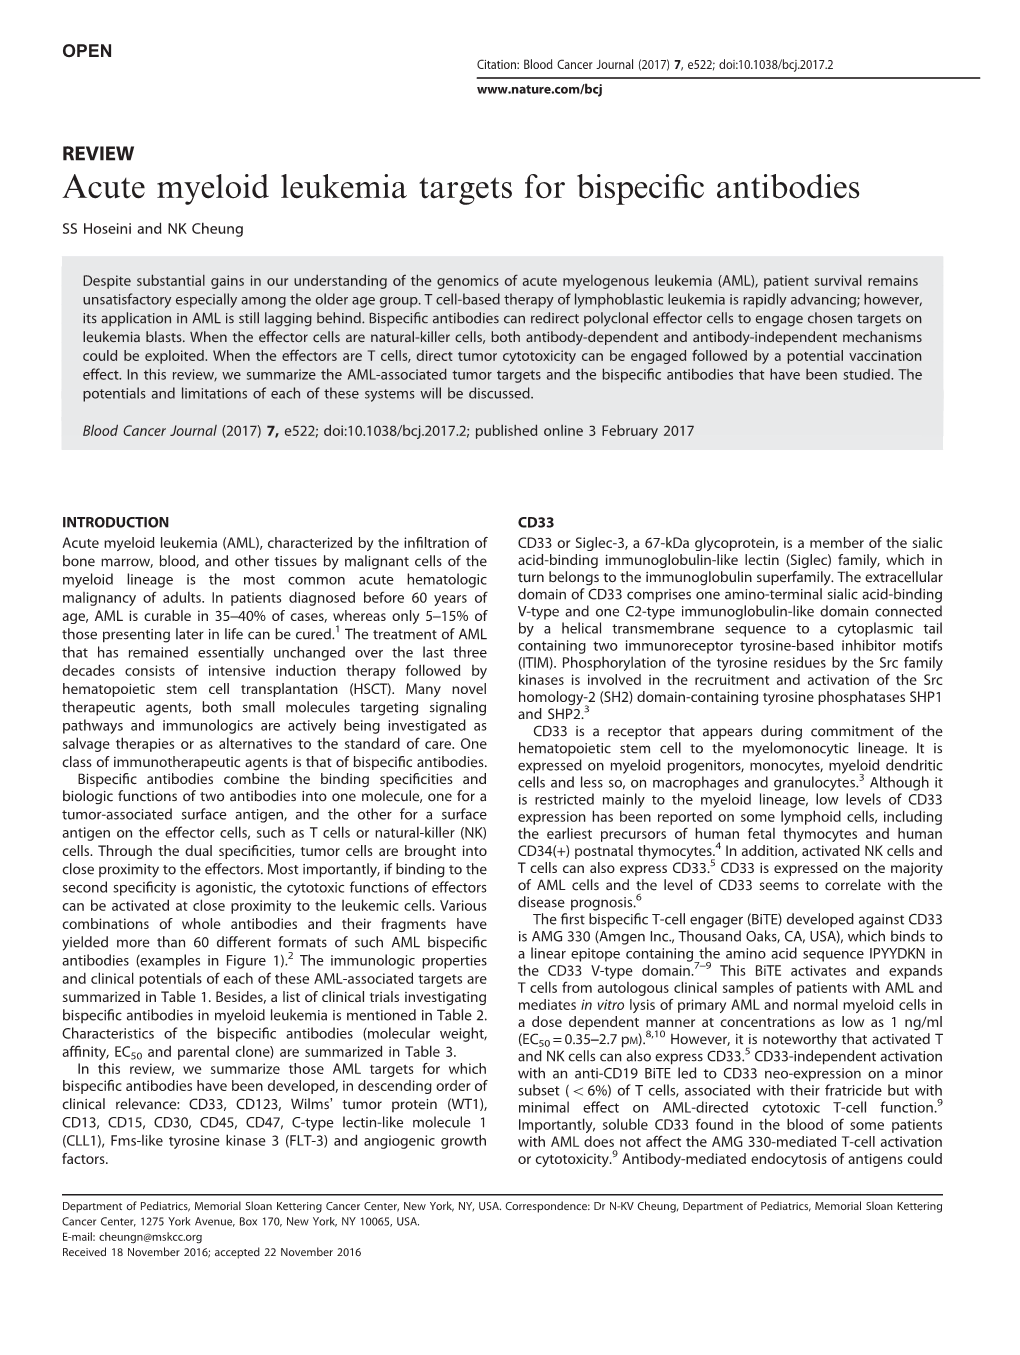 Acute Myeloid Leukemia Targets for Bispecific Antibodies